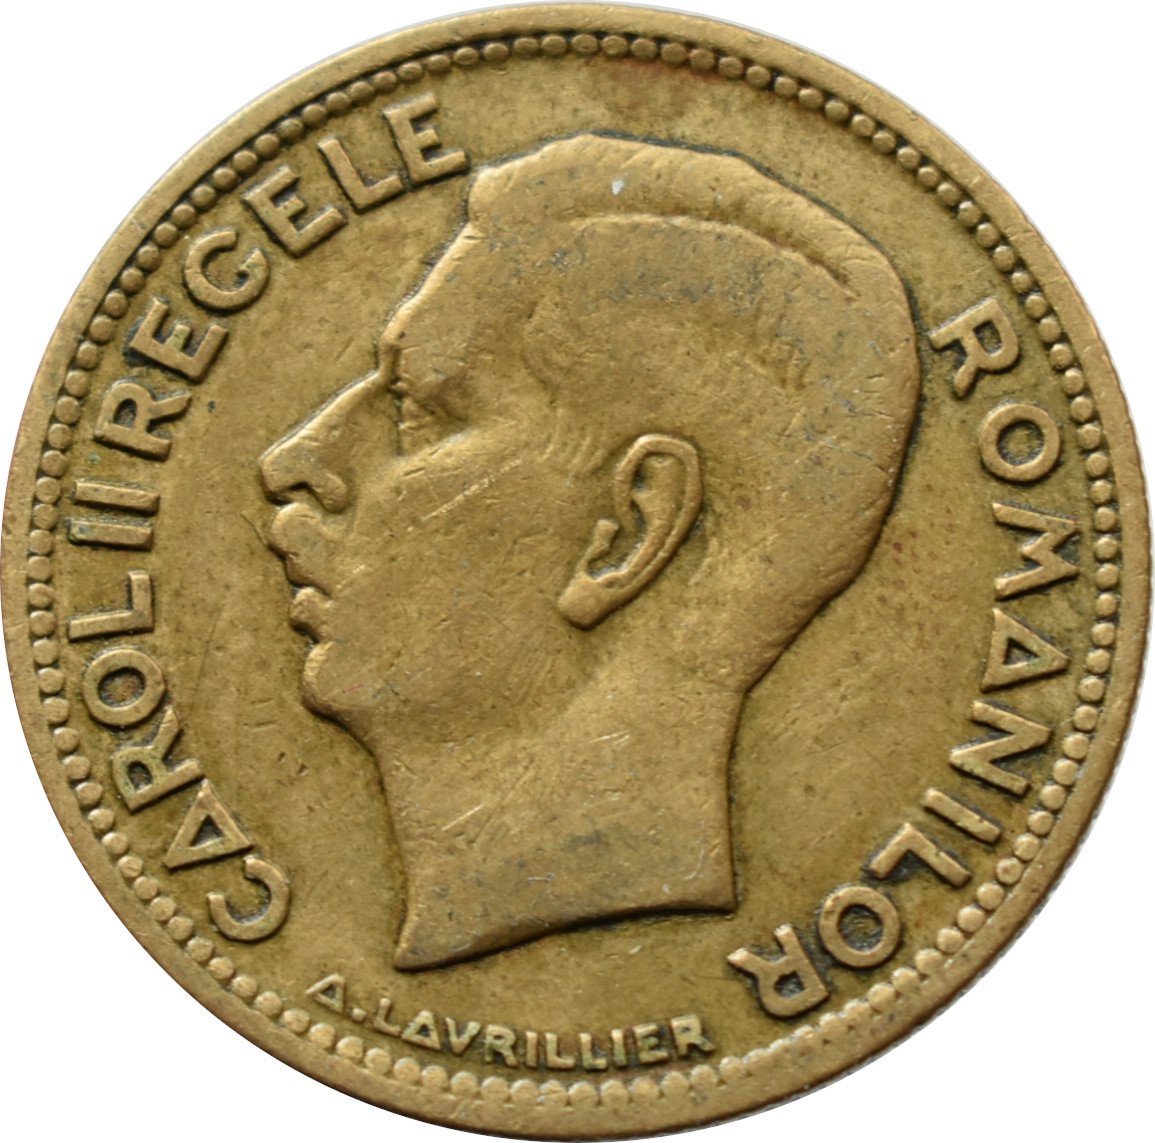 Rumunsko 20 Lei 1930 